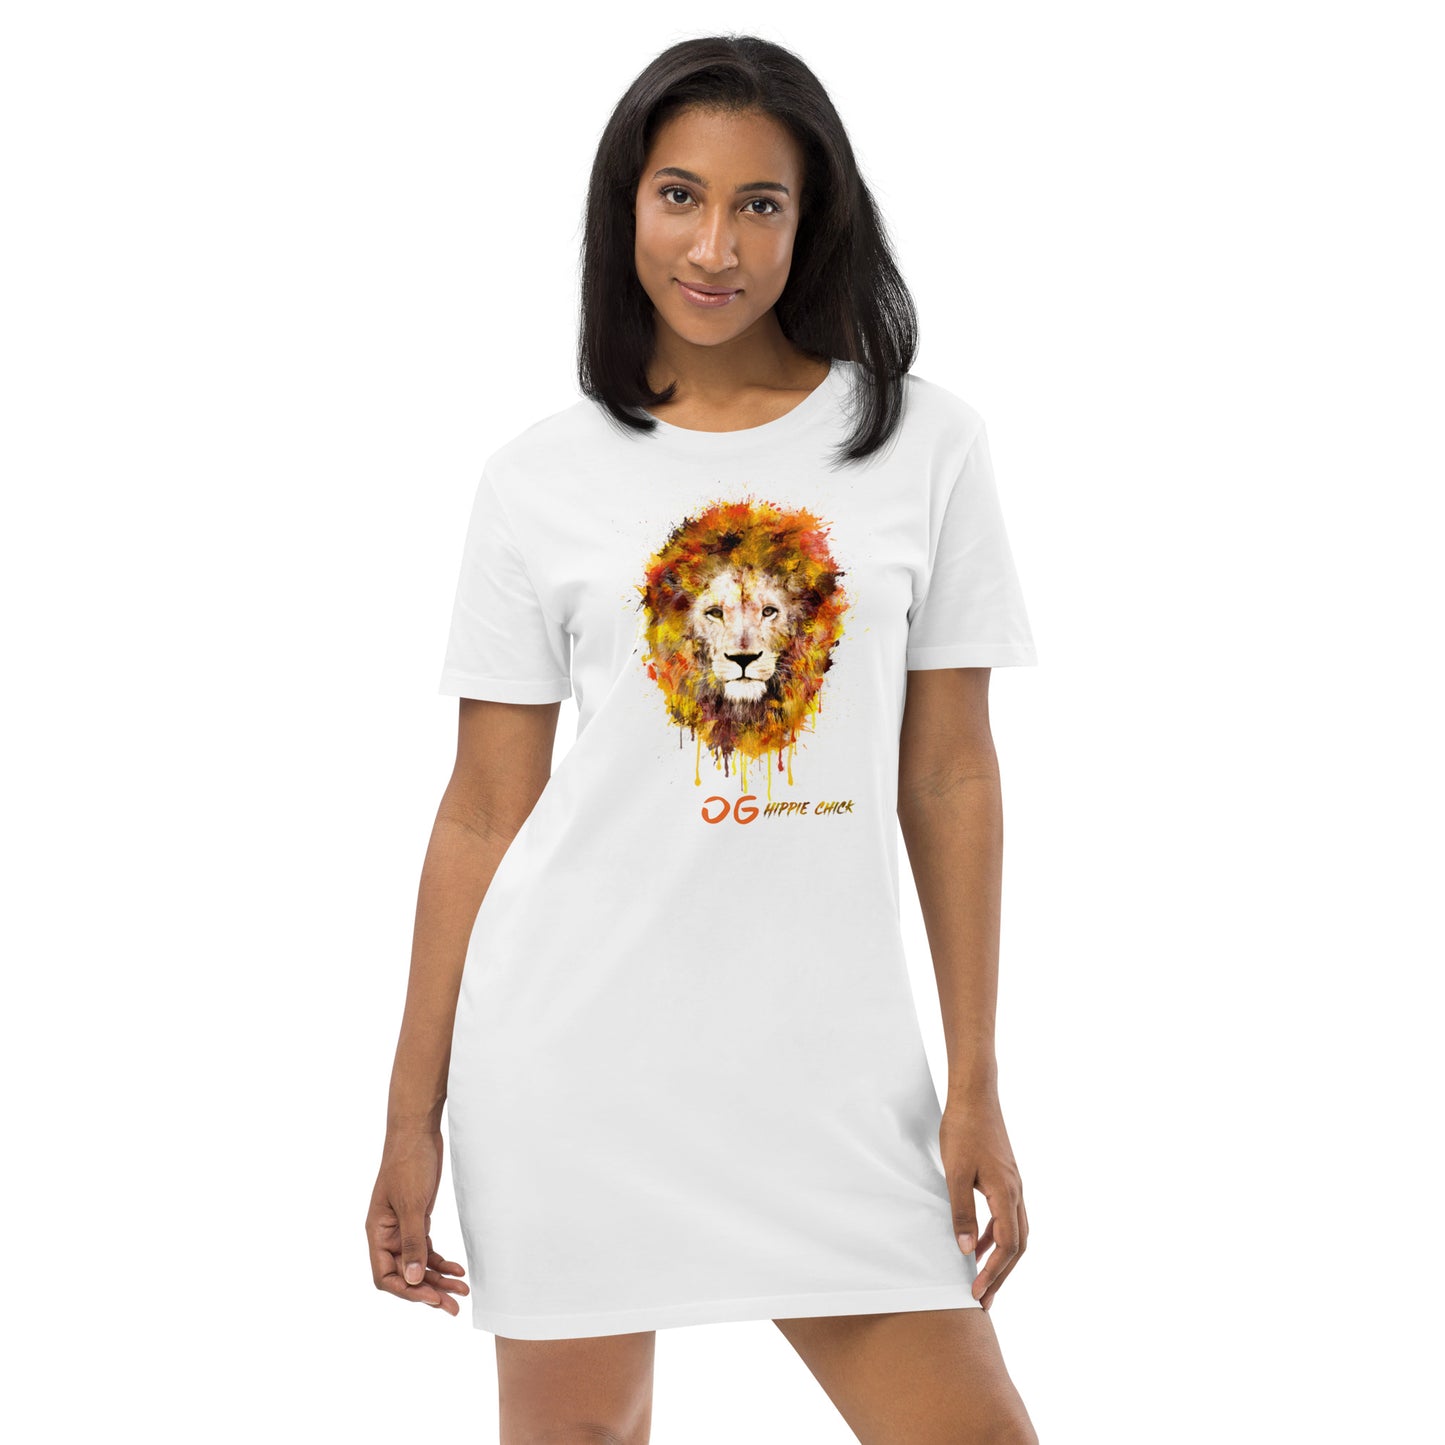 T-shirt Dress (Lion front)